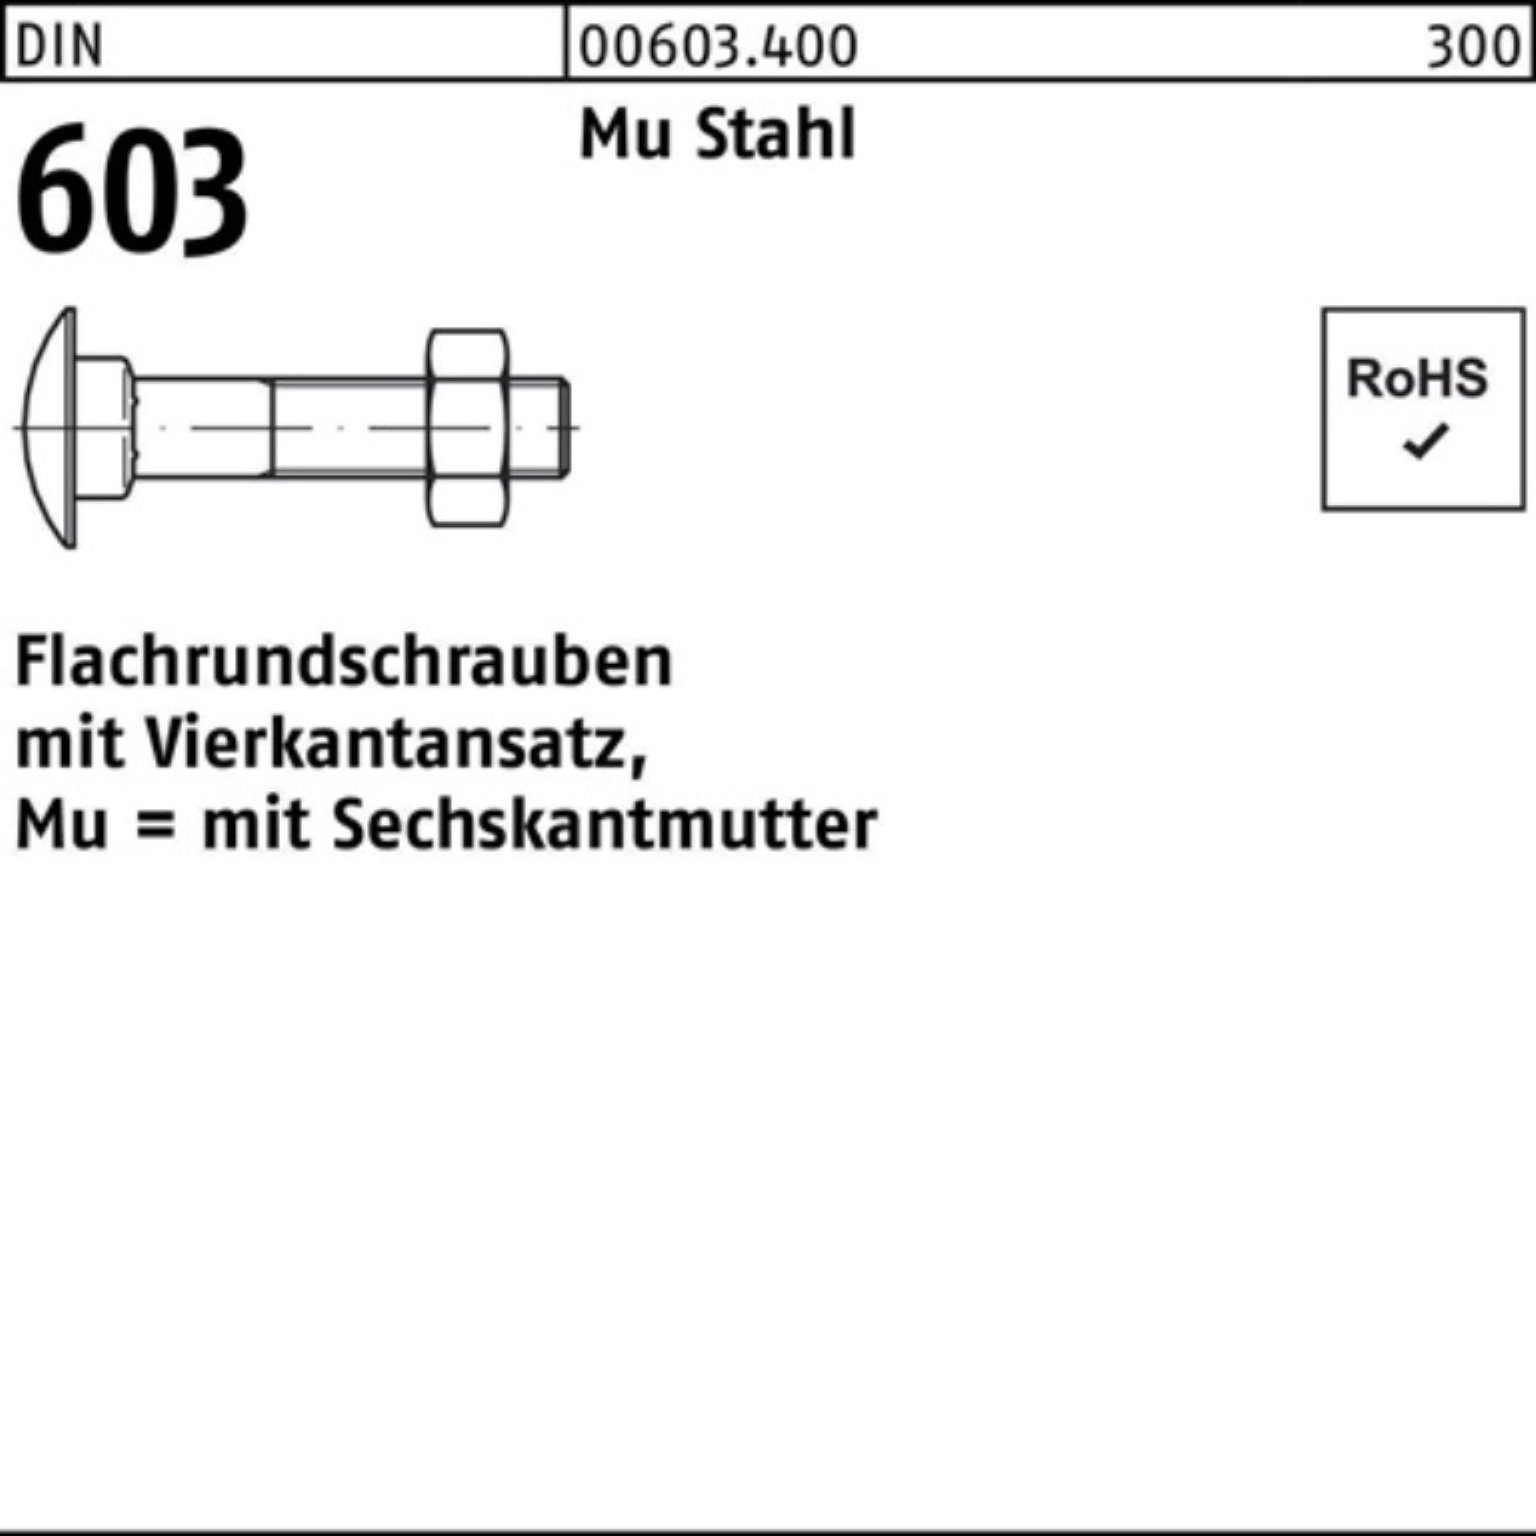 Pack Vierkantansatz/6-ktmutter Reyher 603 Flachrundschraube DIN Schraube M16x150 100er